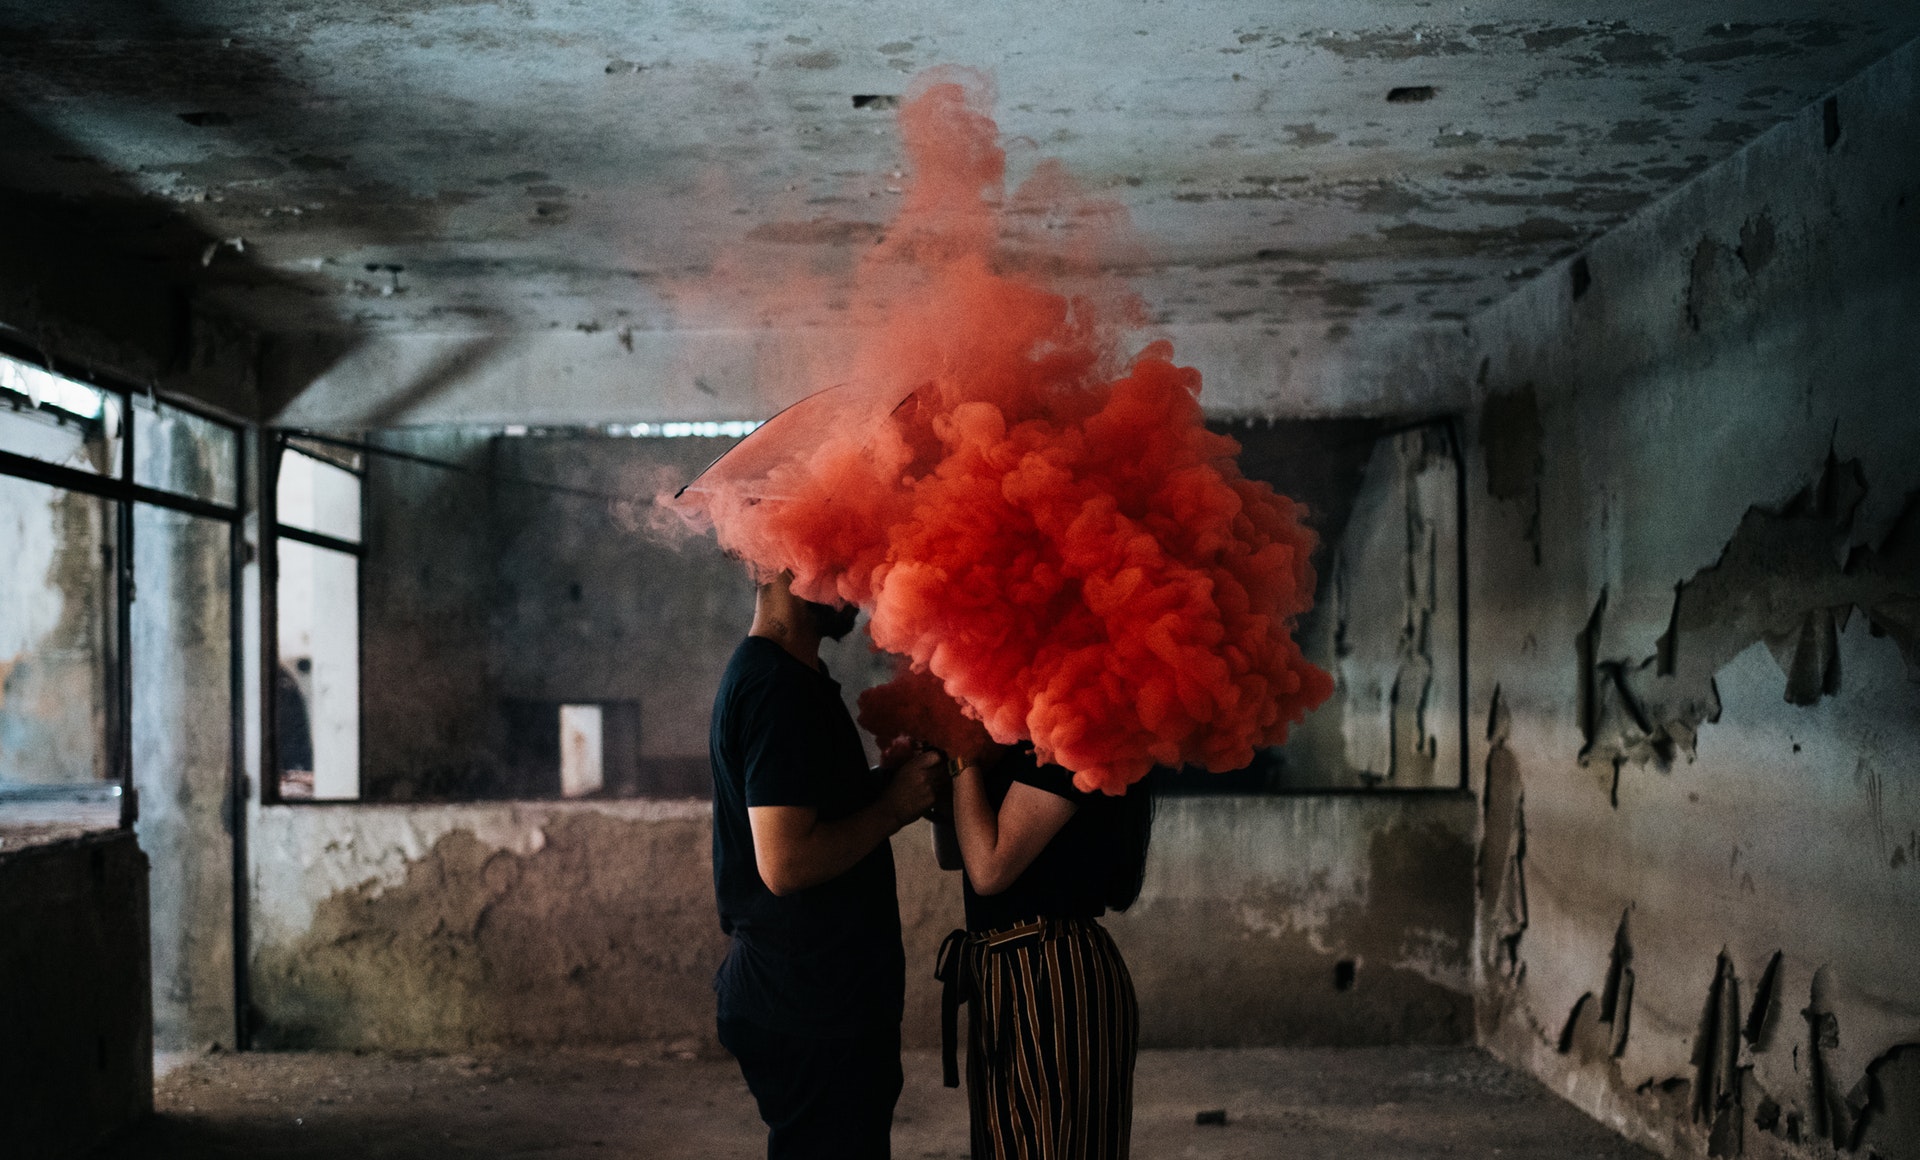 Smoke Bomb Photography Guide With Ideas & Tips - Depositphotos Blog